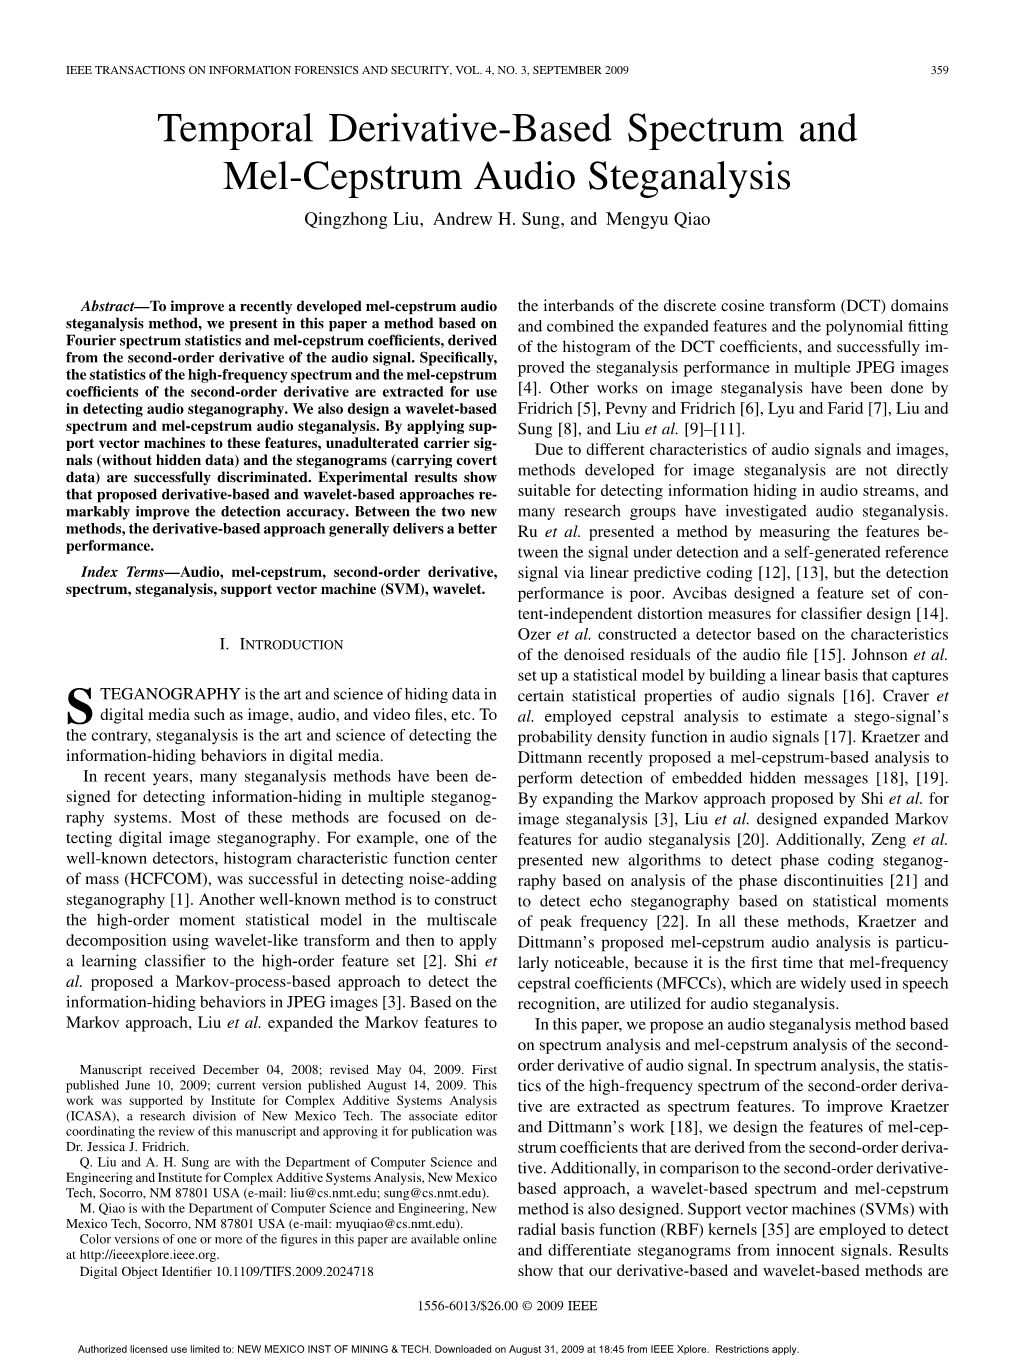 Temporal Derivative-Based Spectrum and Mel-Cepstrum Audio Steganalysis Qingzhong Liu, Andrew H